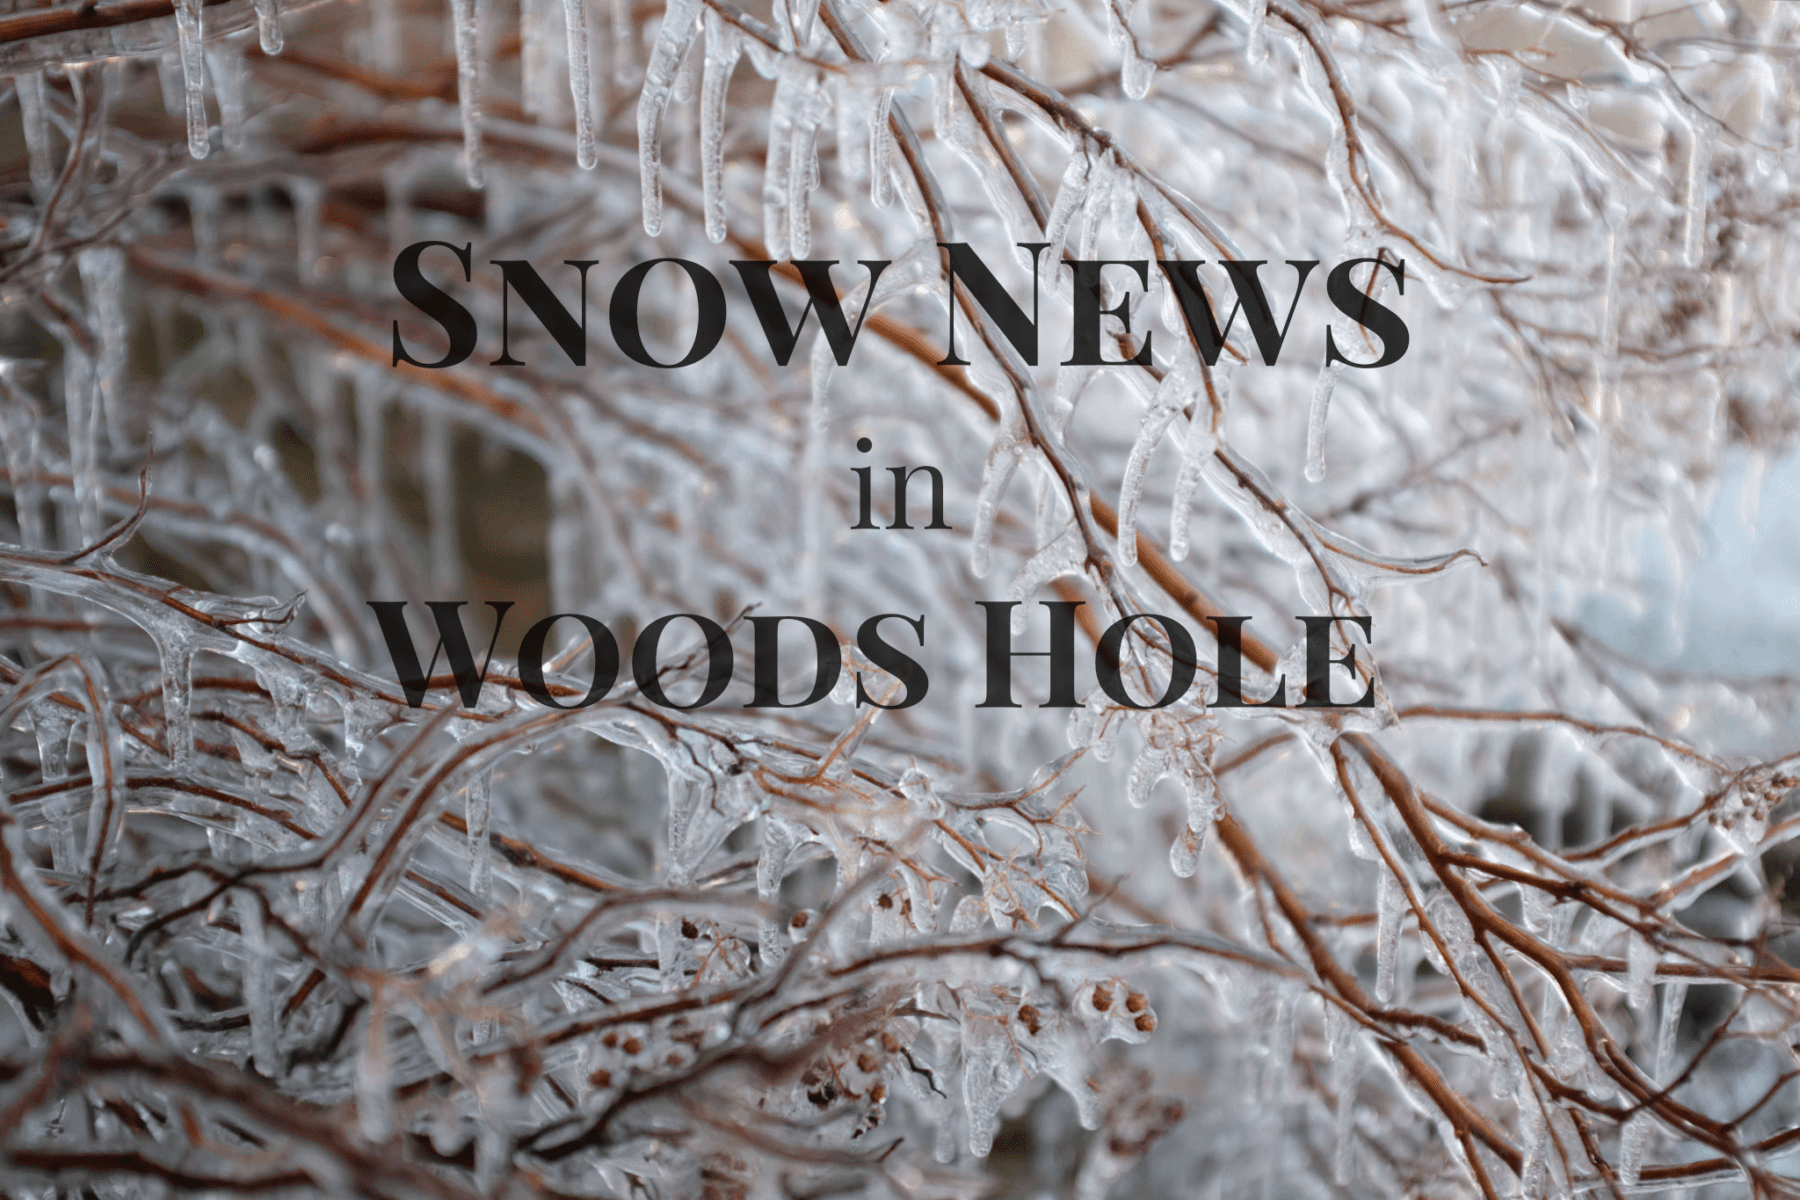 Woods Hole Snow News